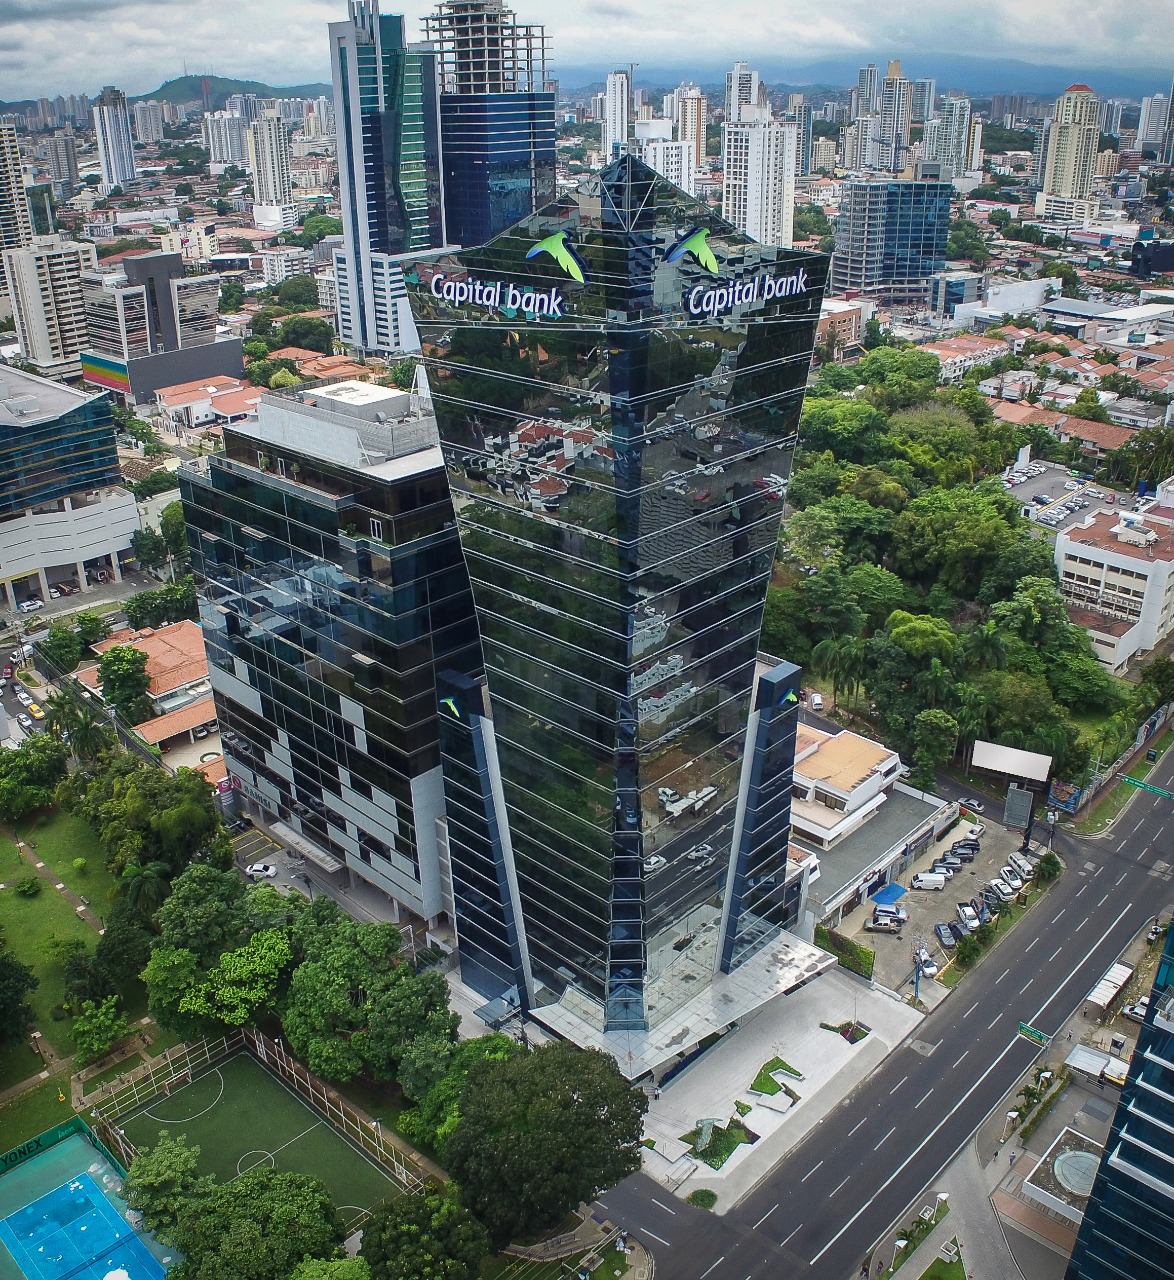 Nuevos movimientos en plaza bancaria local: Mercantil Panamá firmó acuerdo de adquisición Capital Bank